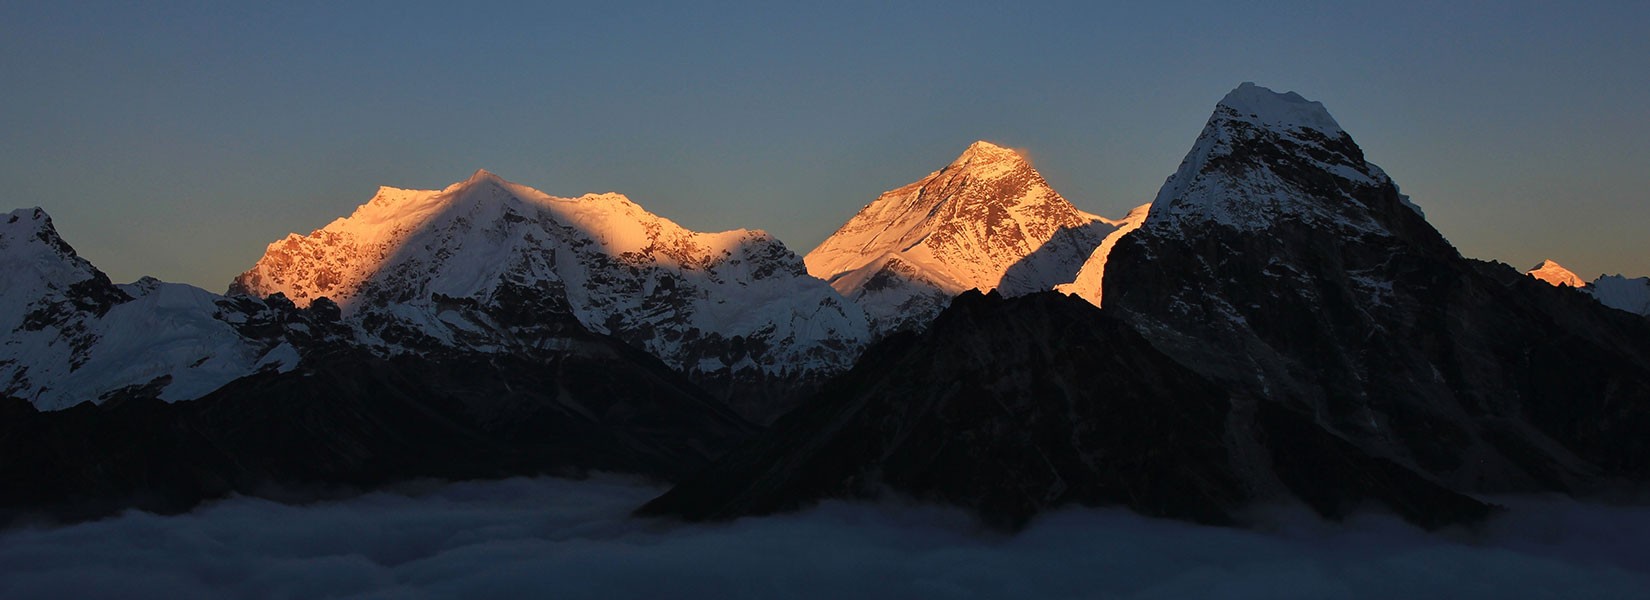 lobuche peak climbing in nepal banner